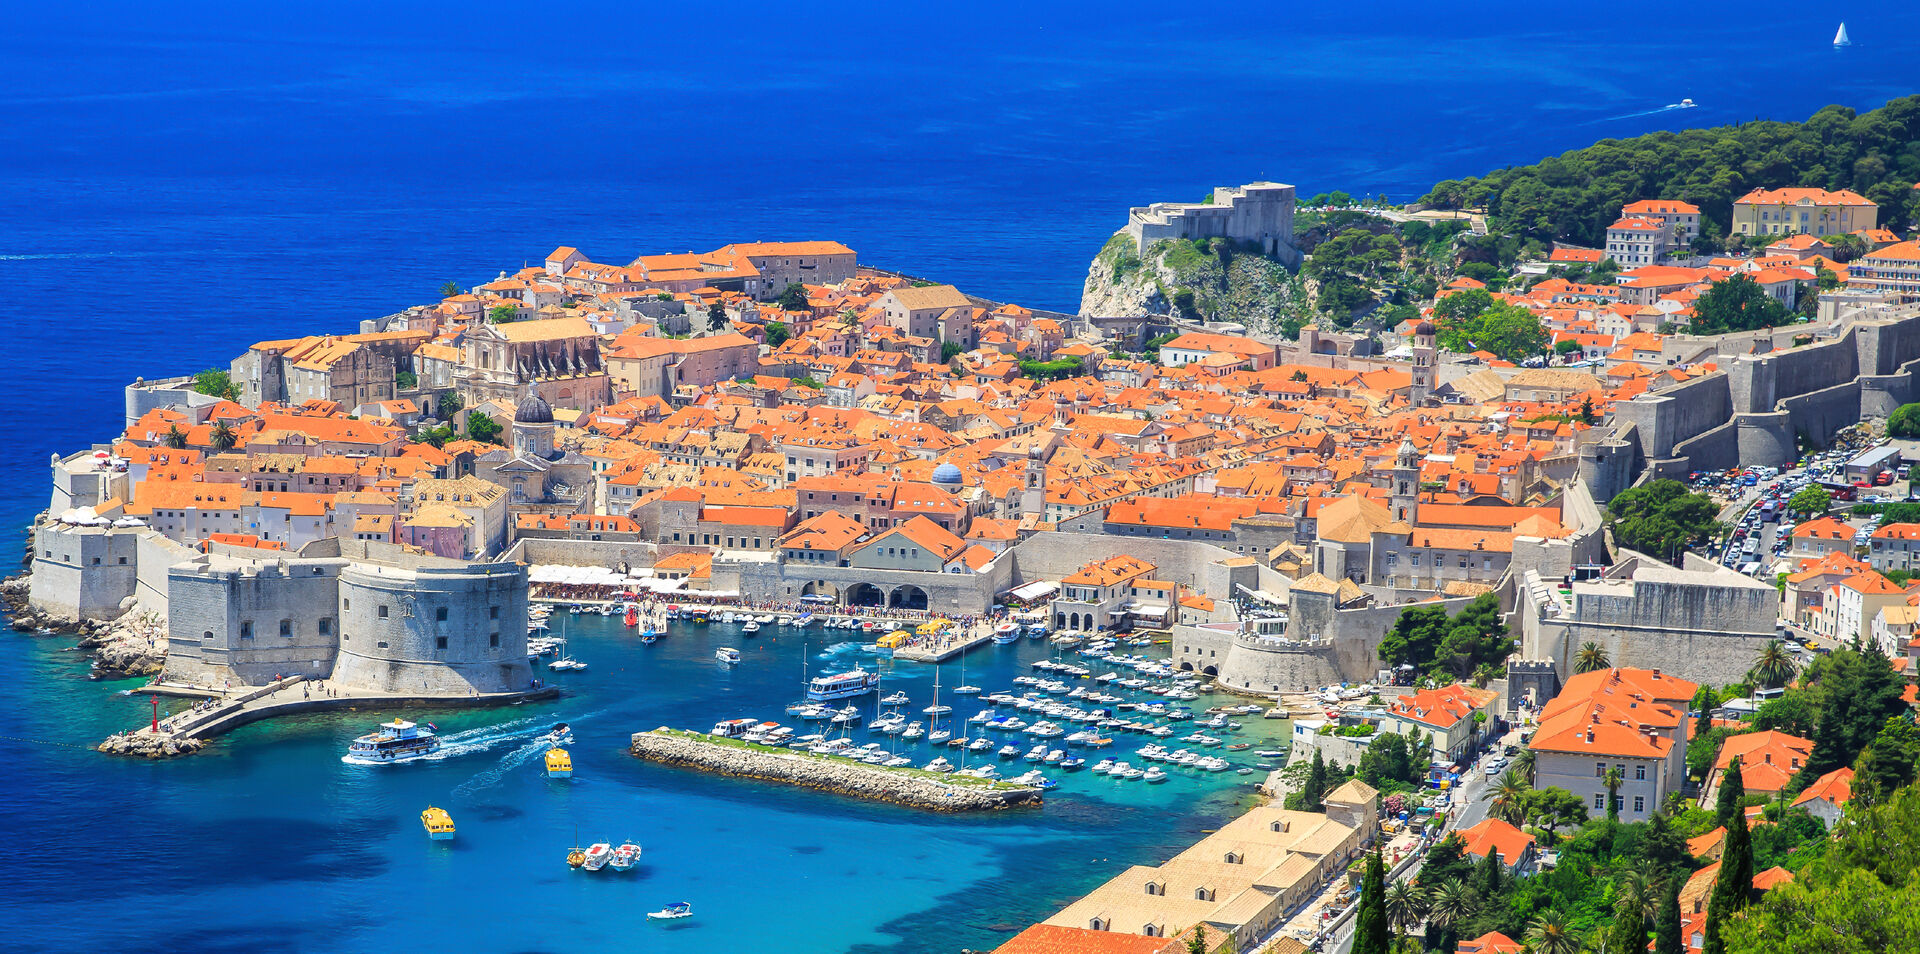 Deluxe One Way Wonders Split - Dubrovnik